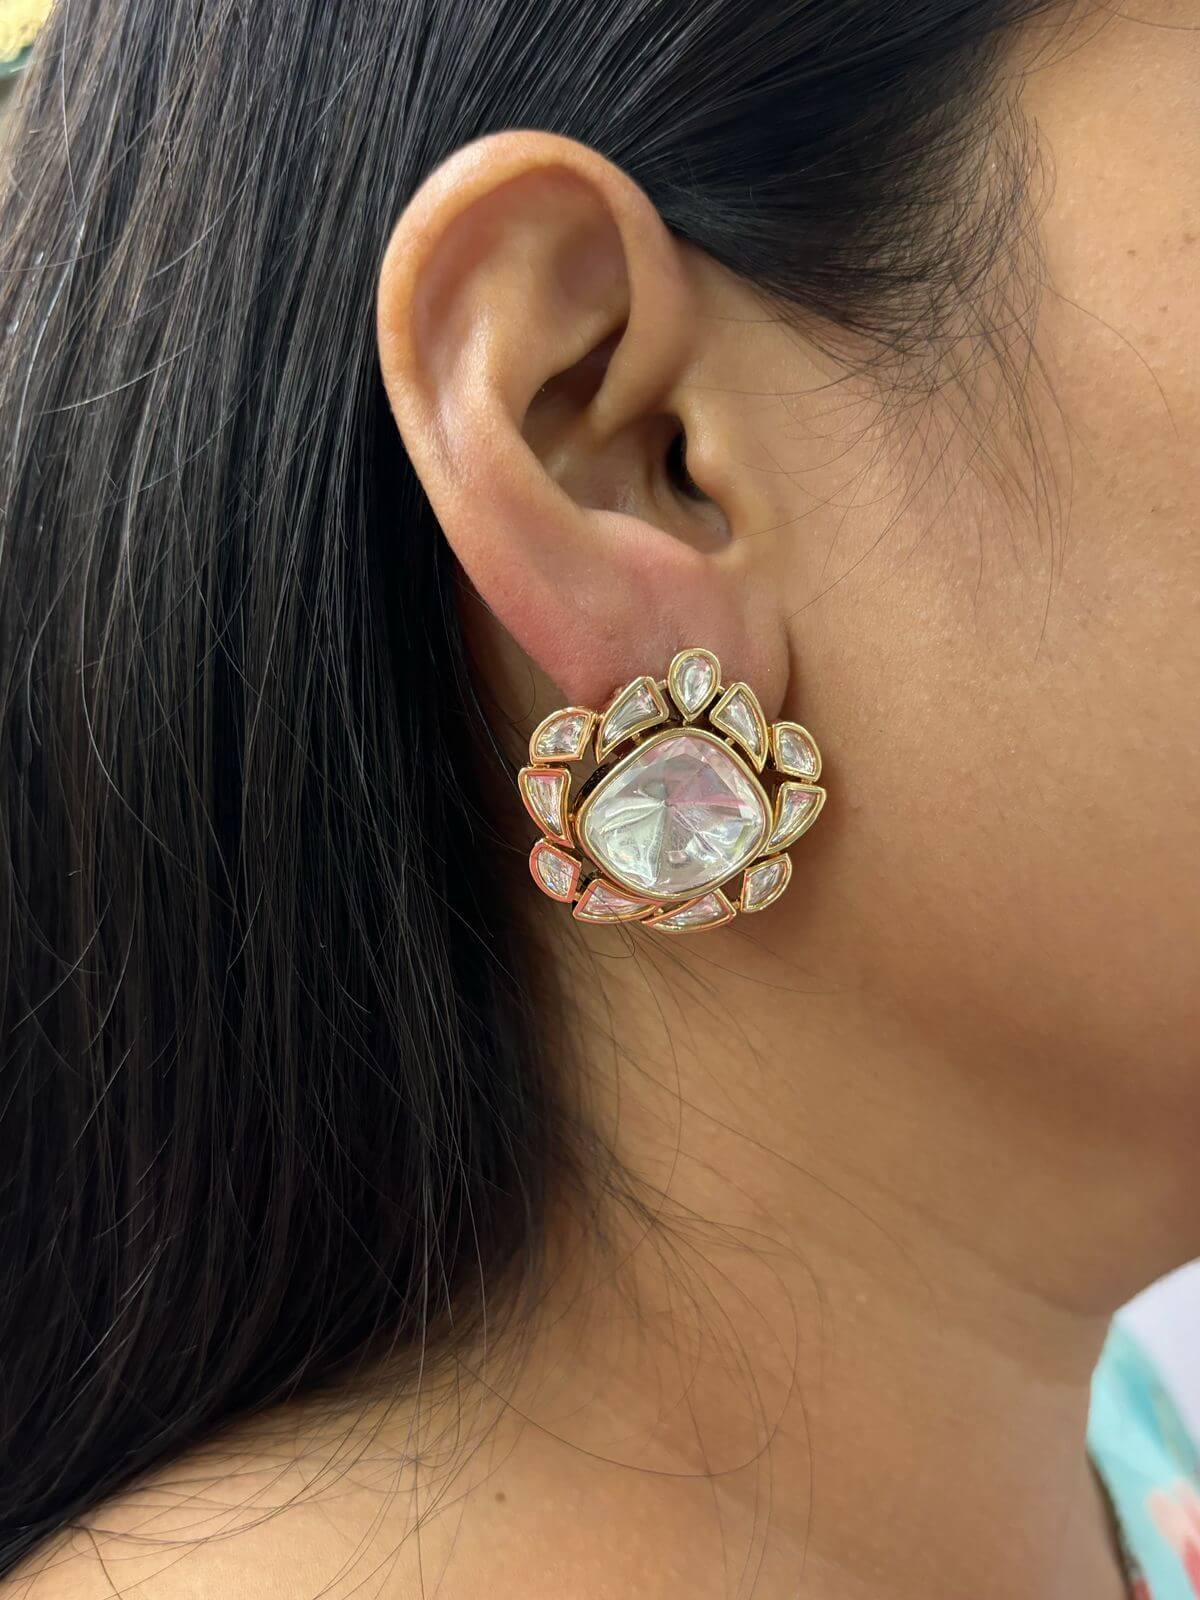 Oxidised Designer Big Jumkha Earrings - Buy Online | Style Club